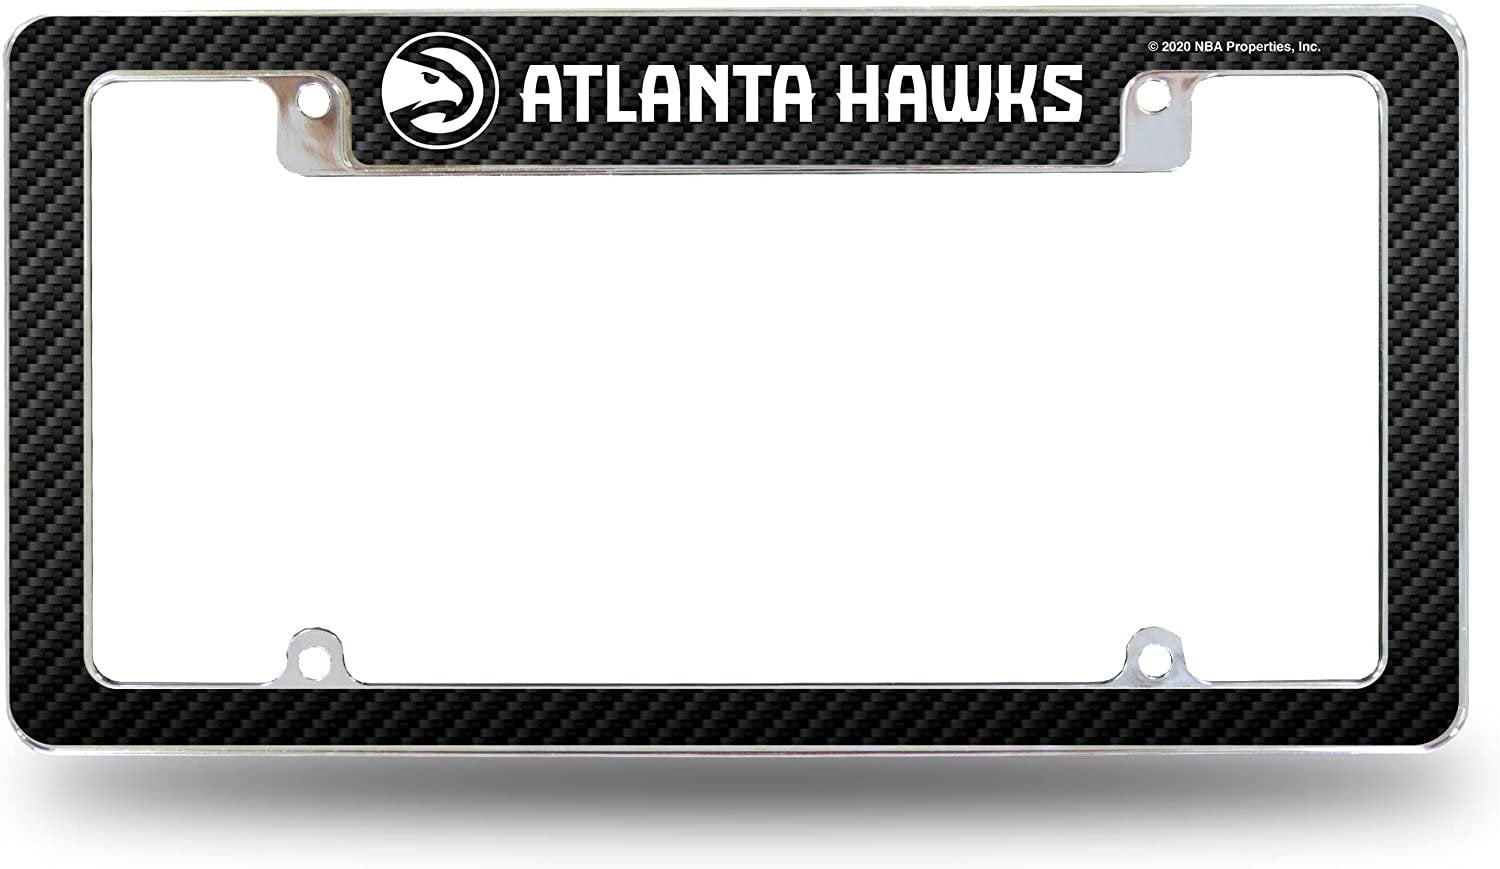 Atlanta Hawks Metal License Plate Frame Tag Cover Carbon Fiber Design 12x6 Inch